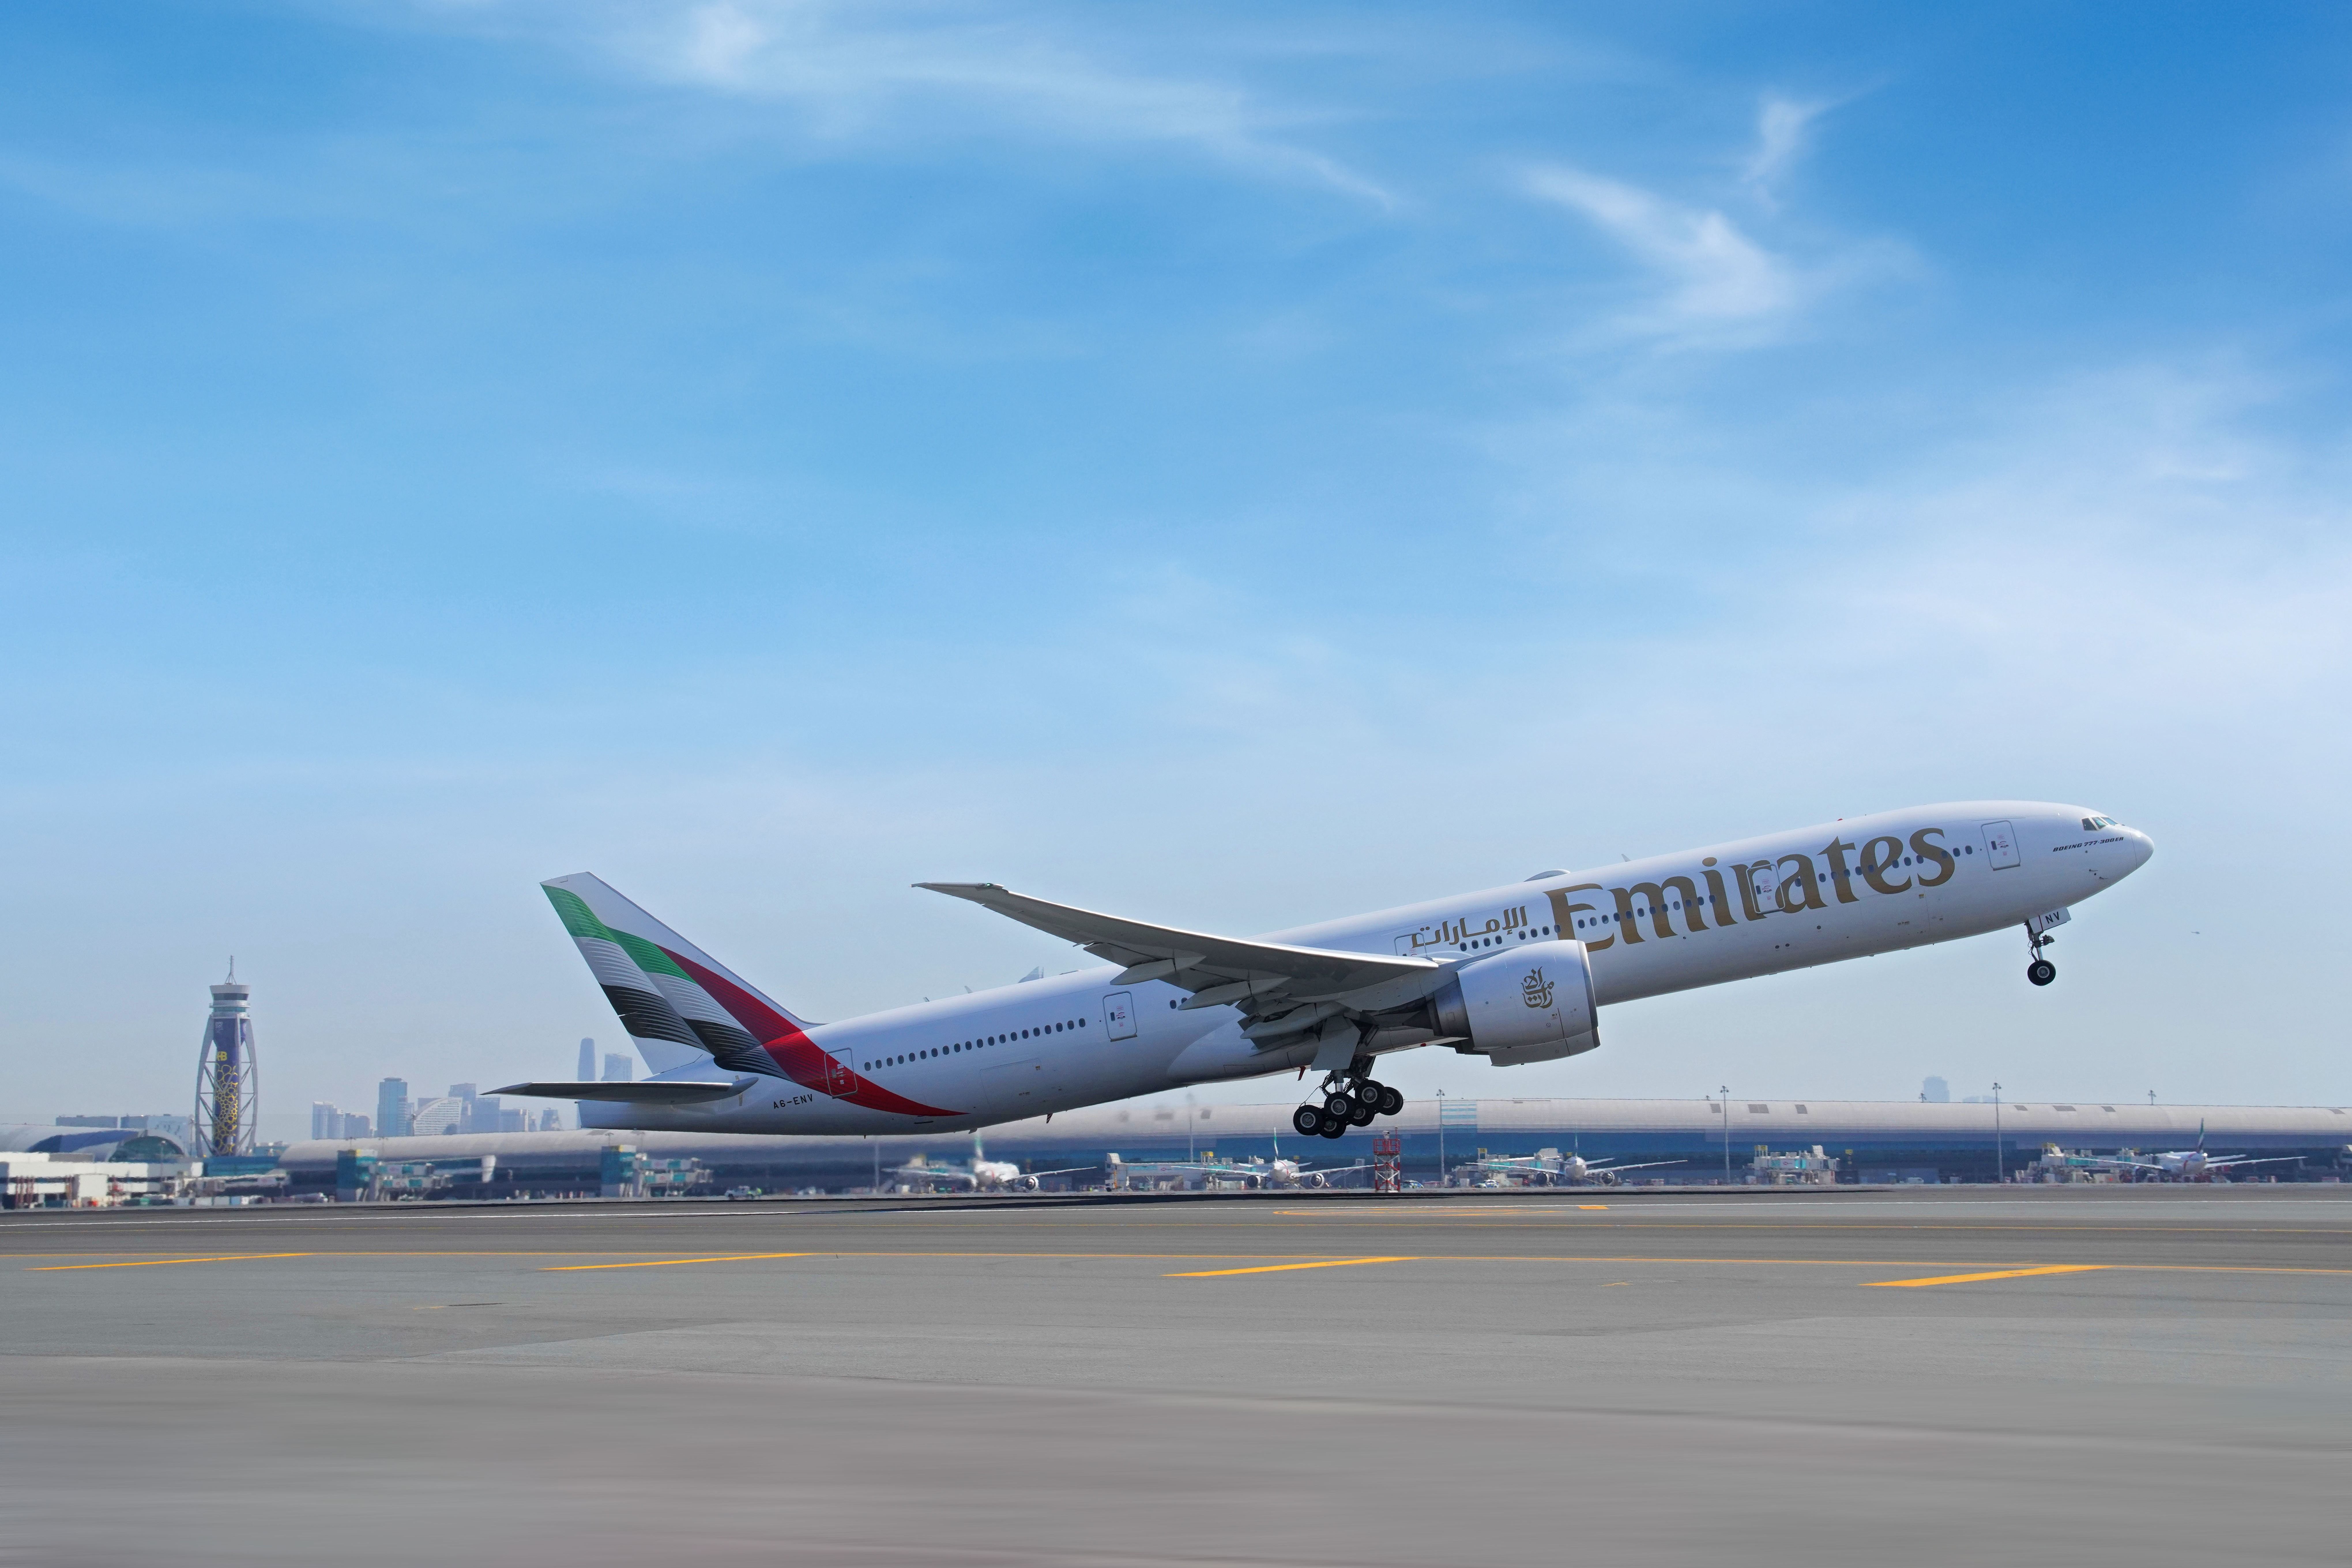 Emirates Boing 777-300ER take off from Dubai International Airport